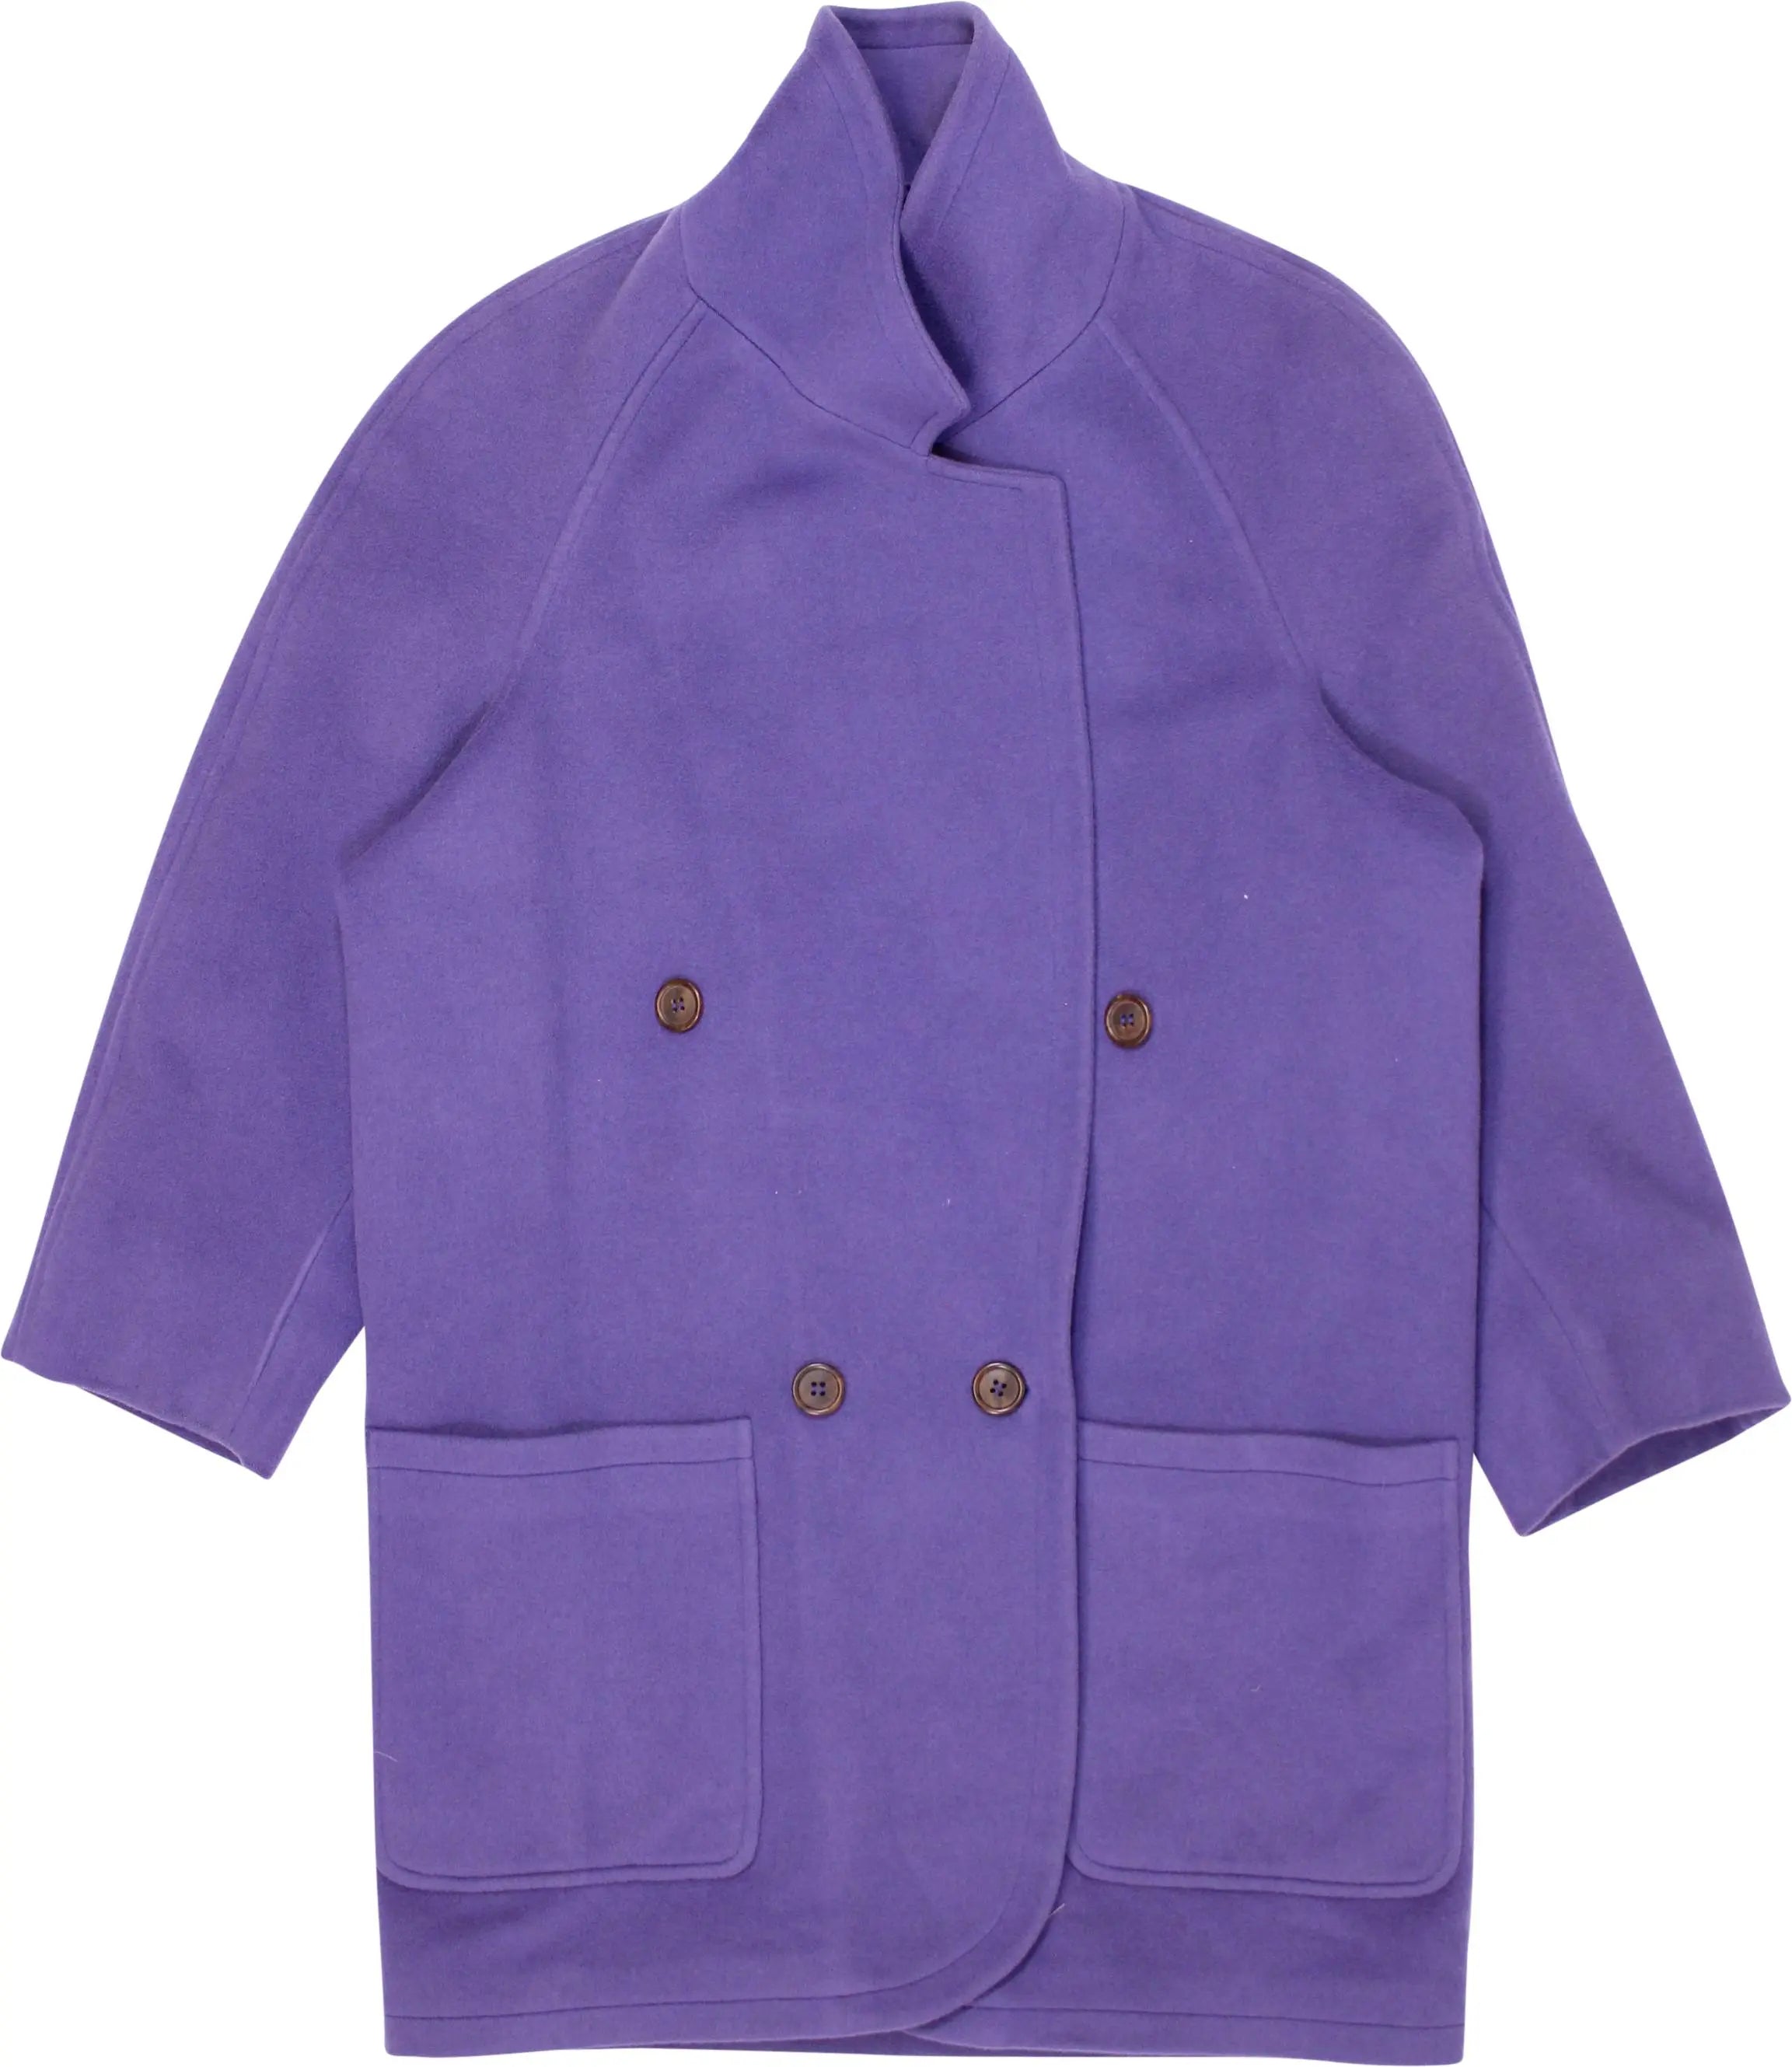 Les Copains Prestige - Purple Wool and Cashmere Coat by Les Copains Prestige- ThriftTale.com - Vintage and second handclothing